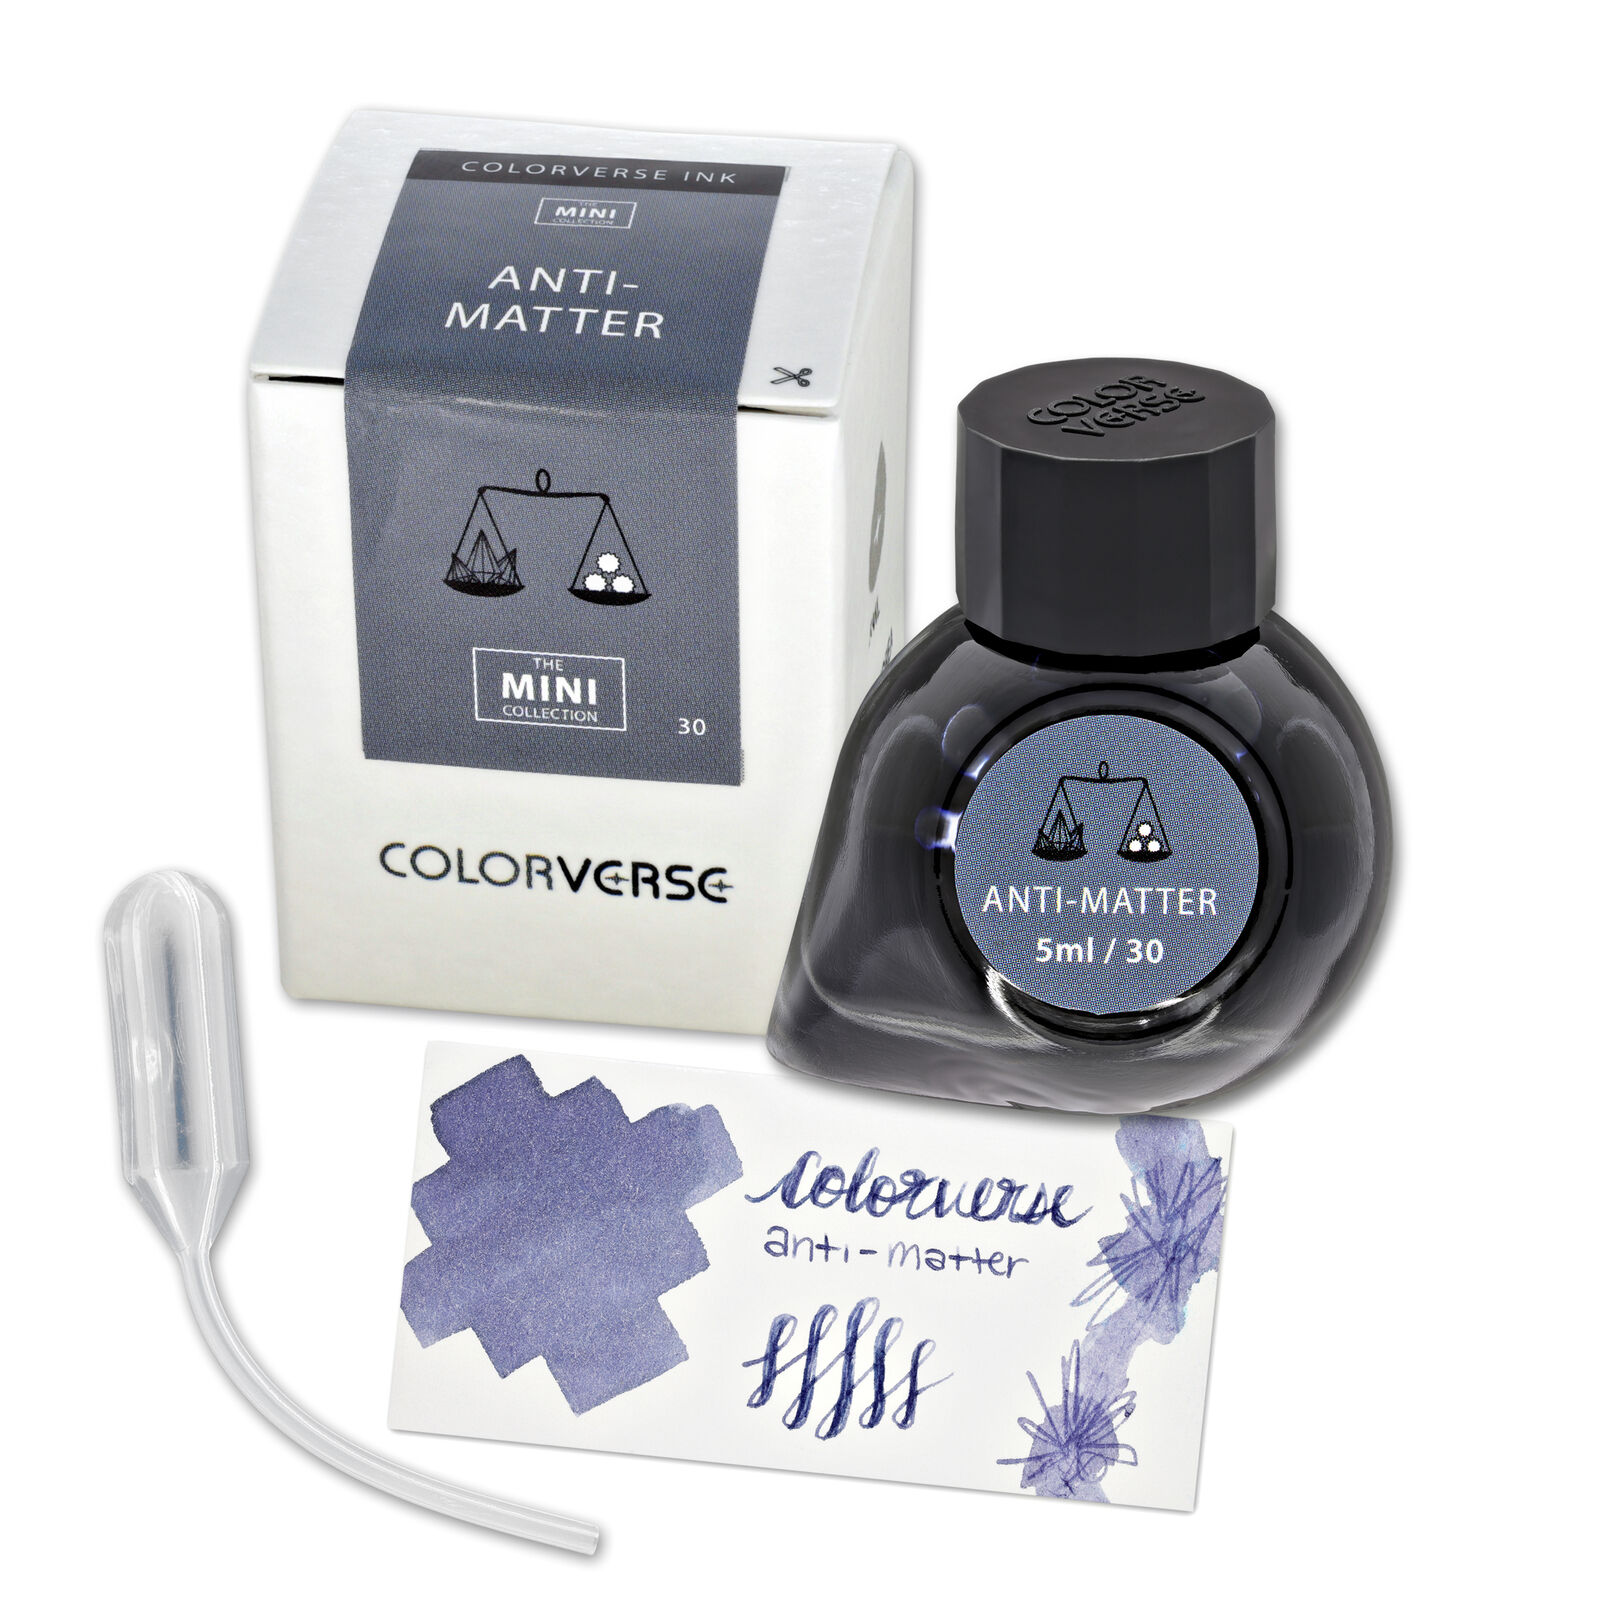 Colorverse Multiverse Mini Bottled Ink in Anti-Matter - 5mL - NEW in Box